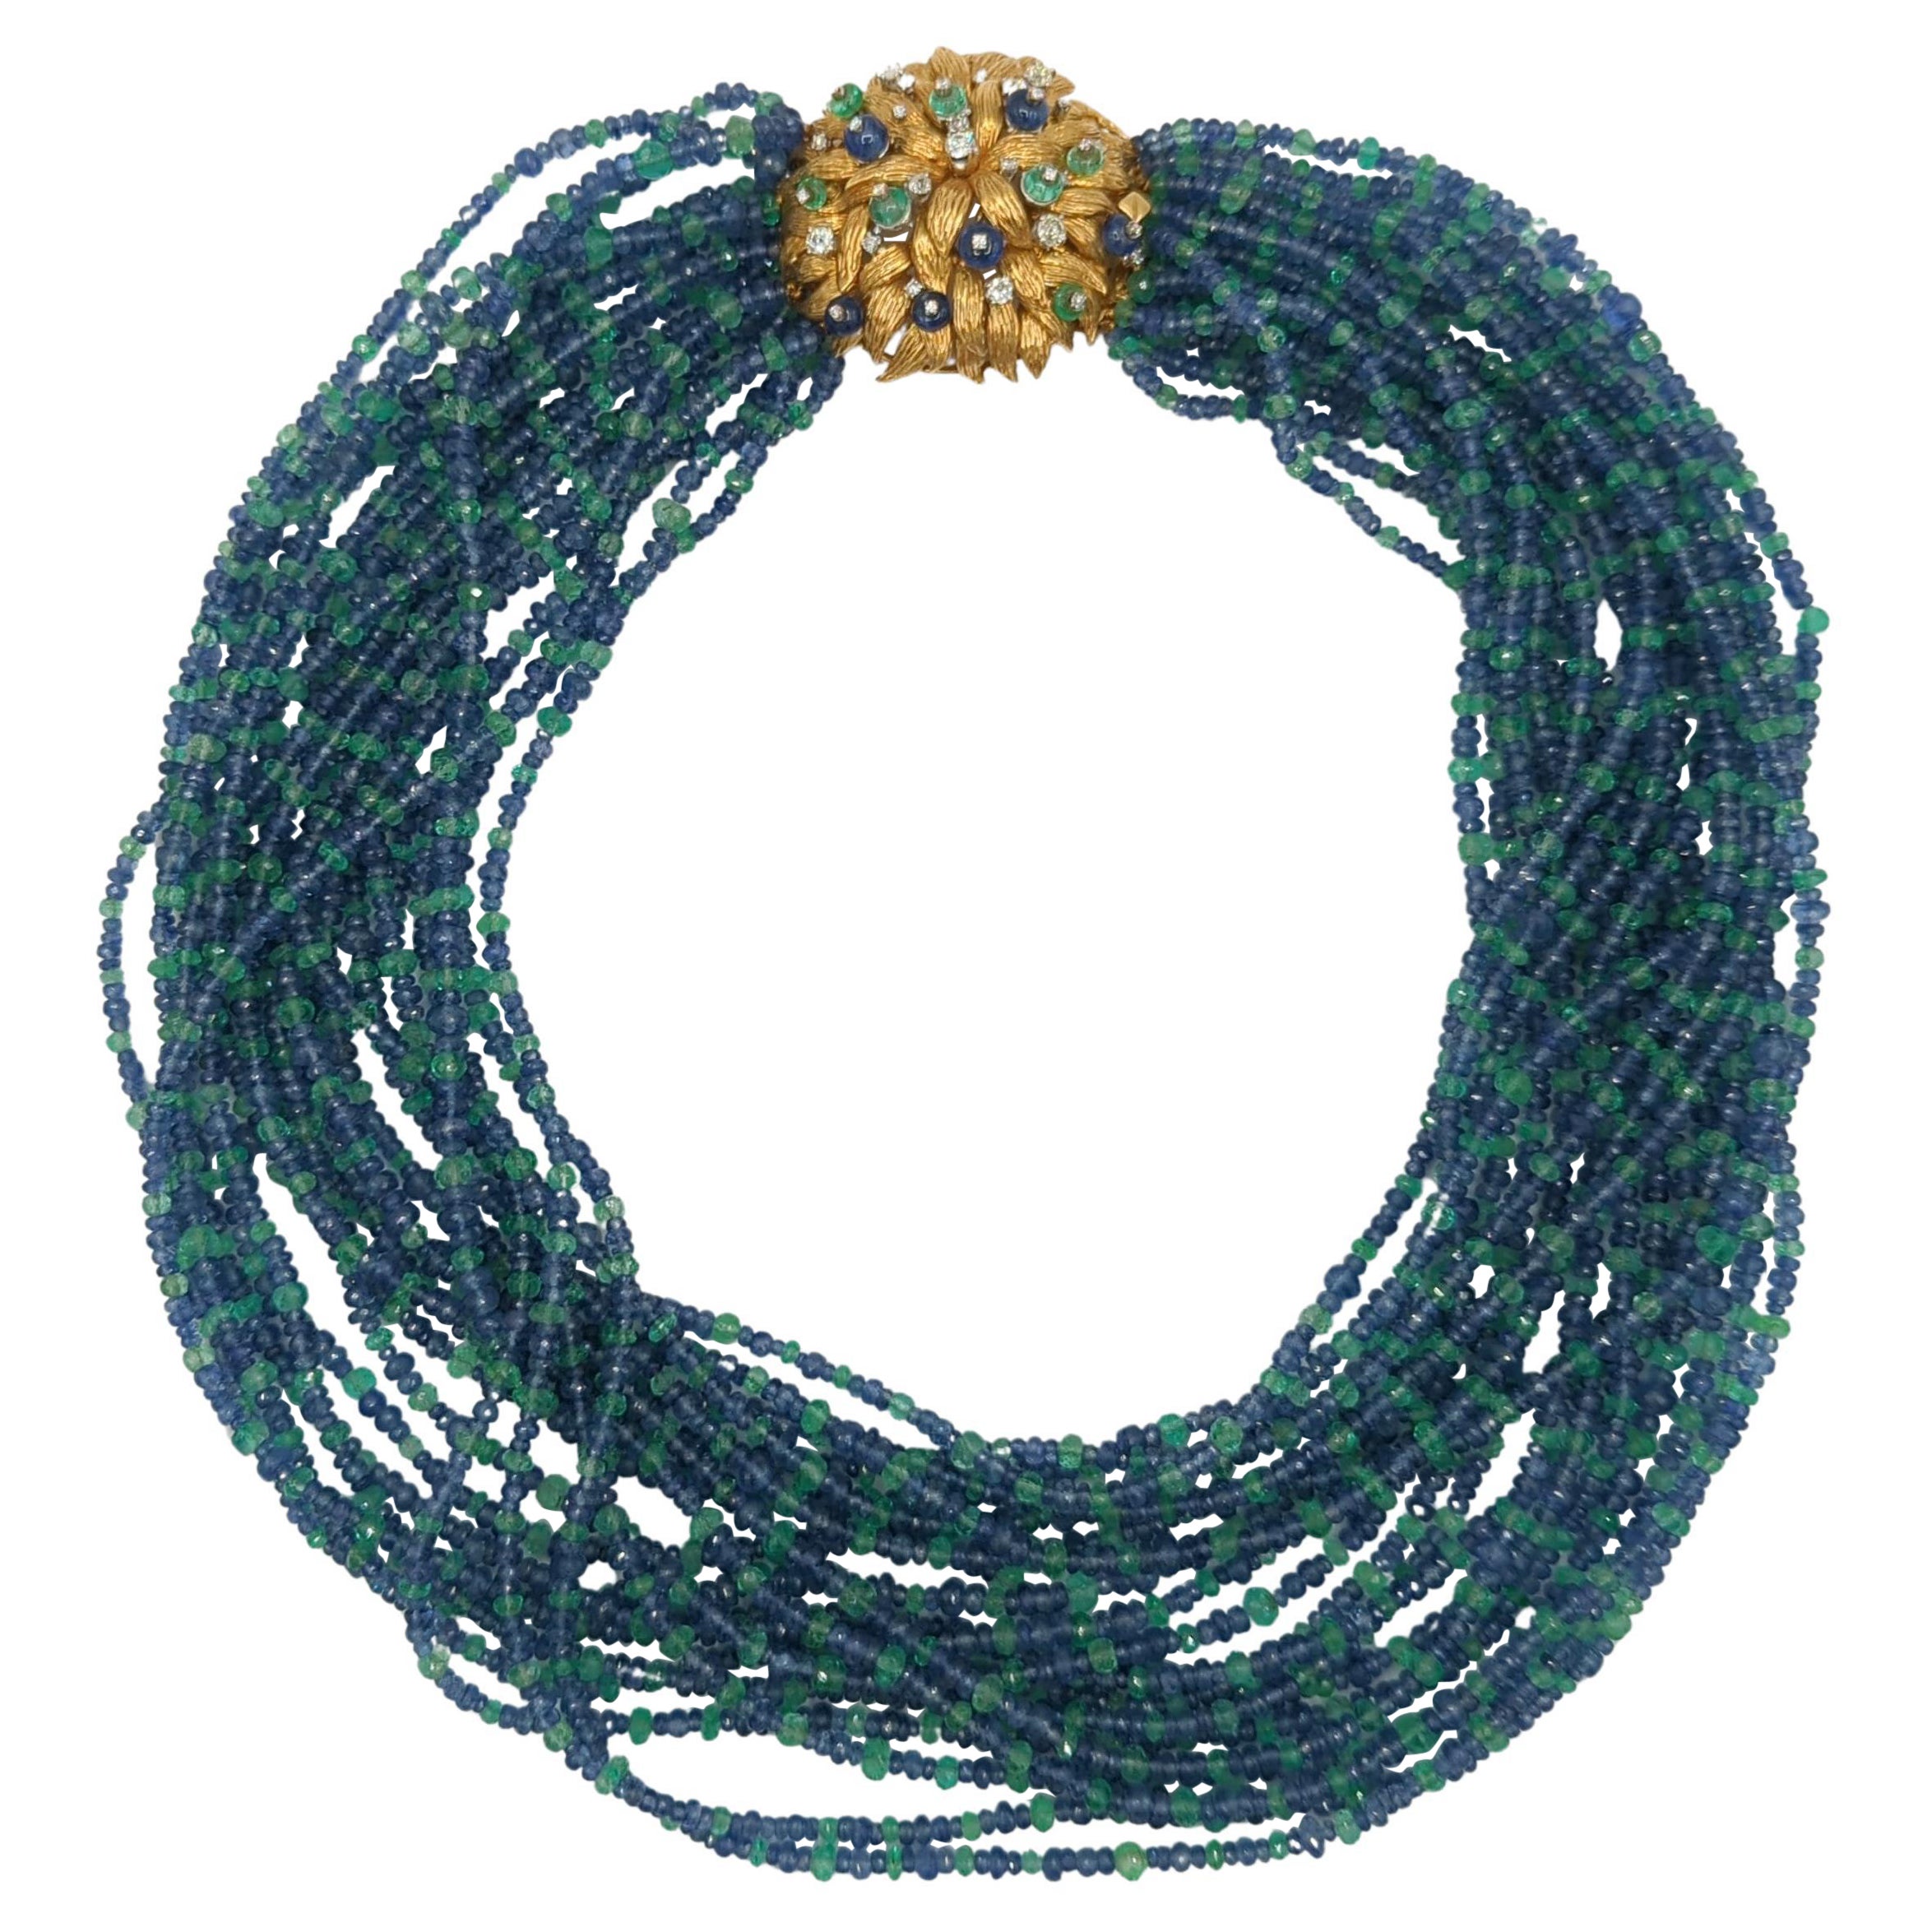 Collier de perles d'émeraude de Colombie et de saphir bleu de Ceylan en or jaune 18 carats